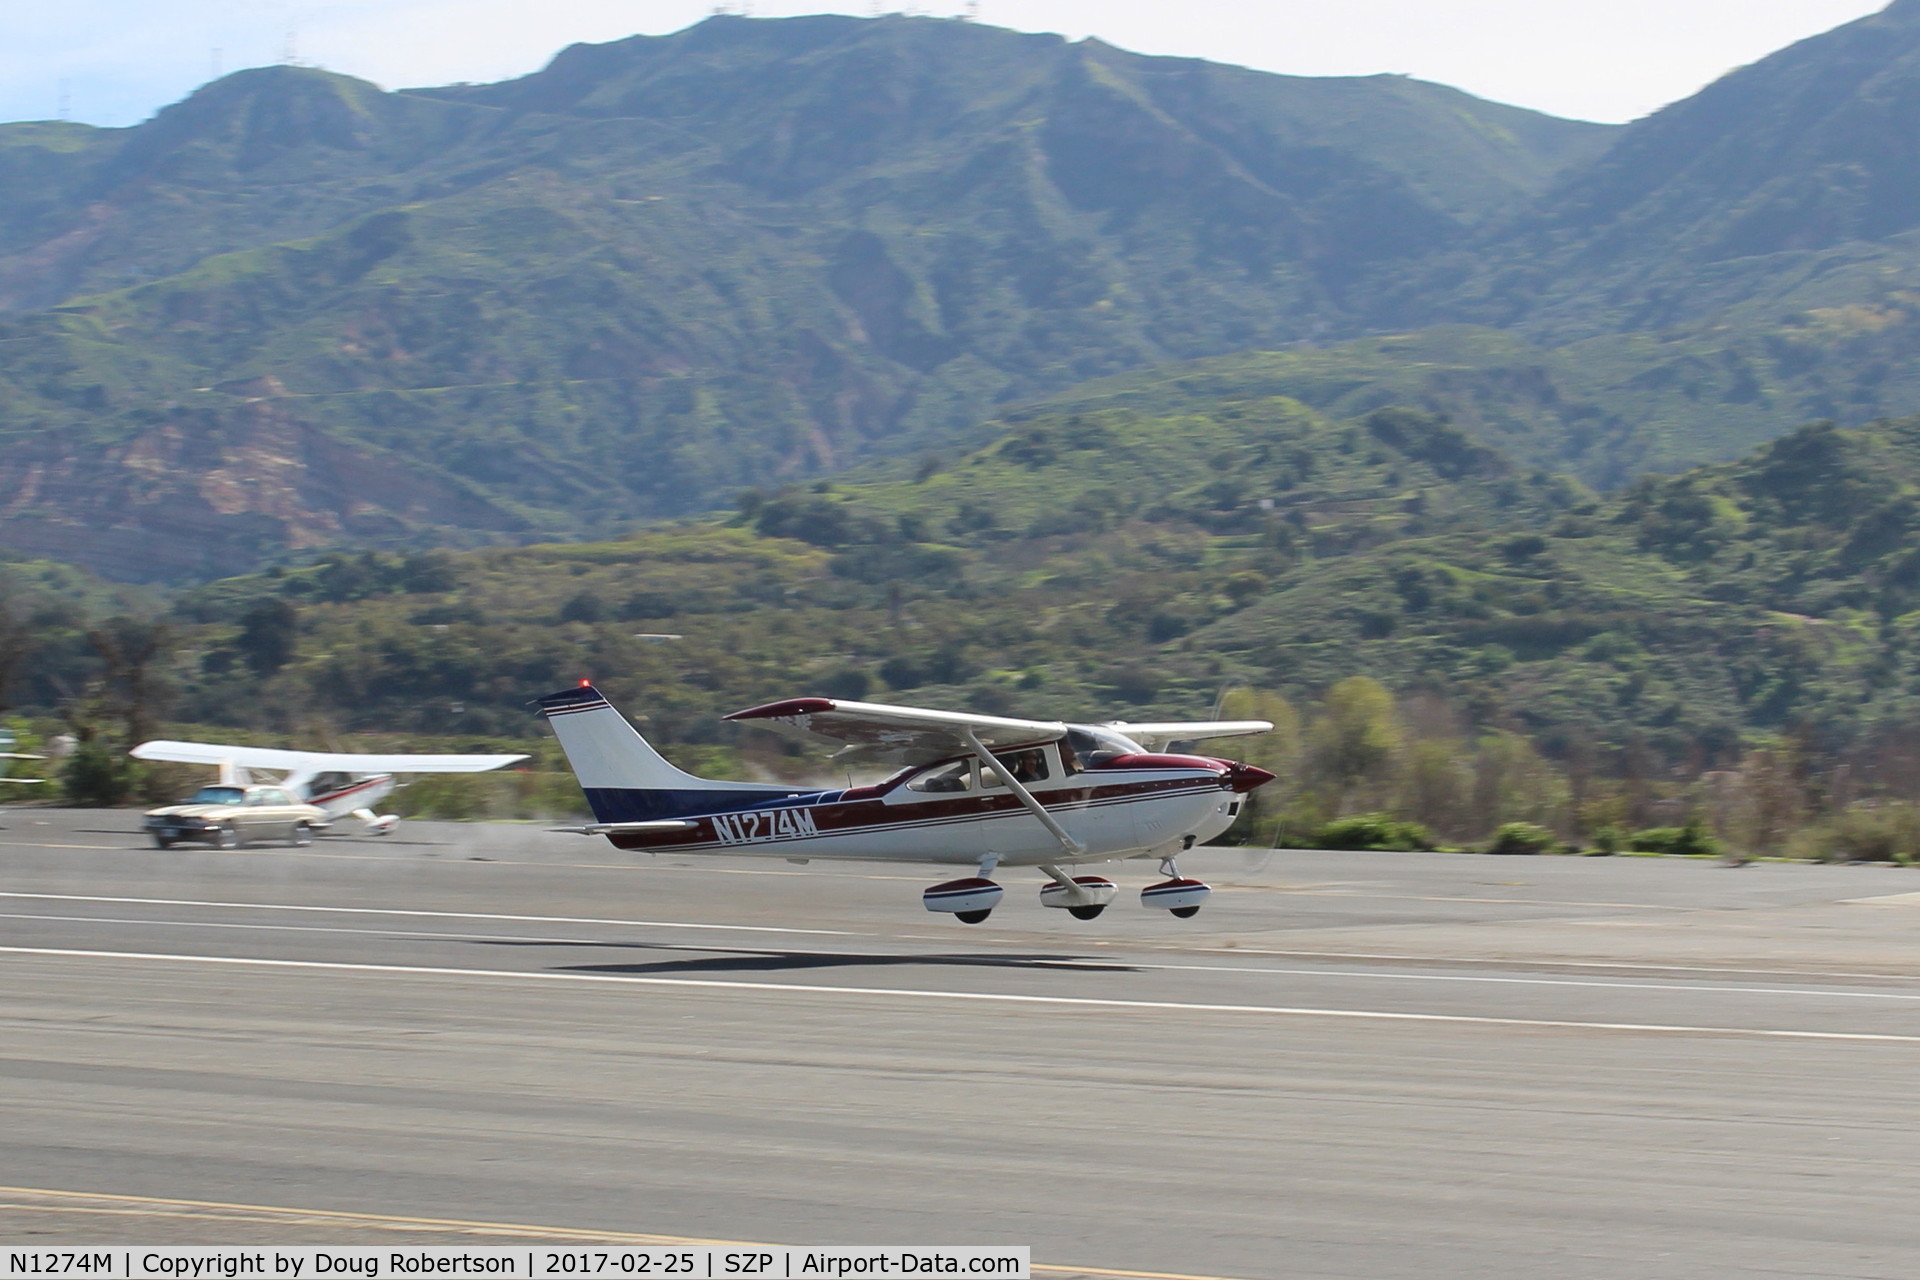 N1274M, 1975 Cessna 182P Skylane C/N 18264271, 1975 Cessna 182P SKYLANE, Continental O-470-S 230 Hp, landing Rwy 22